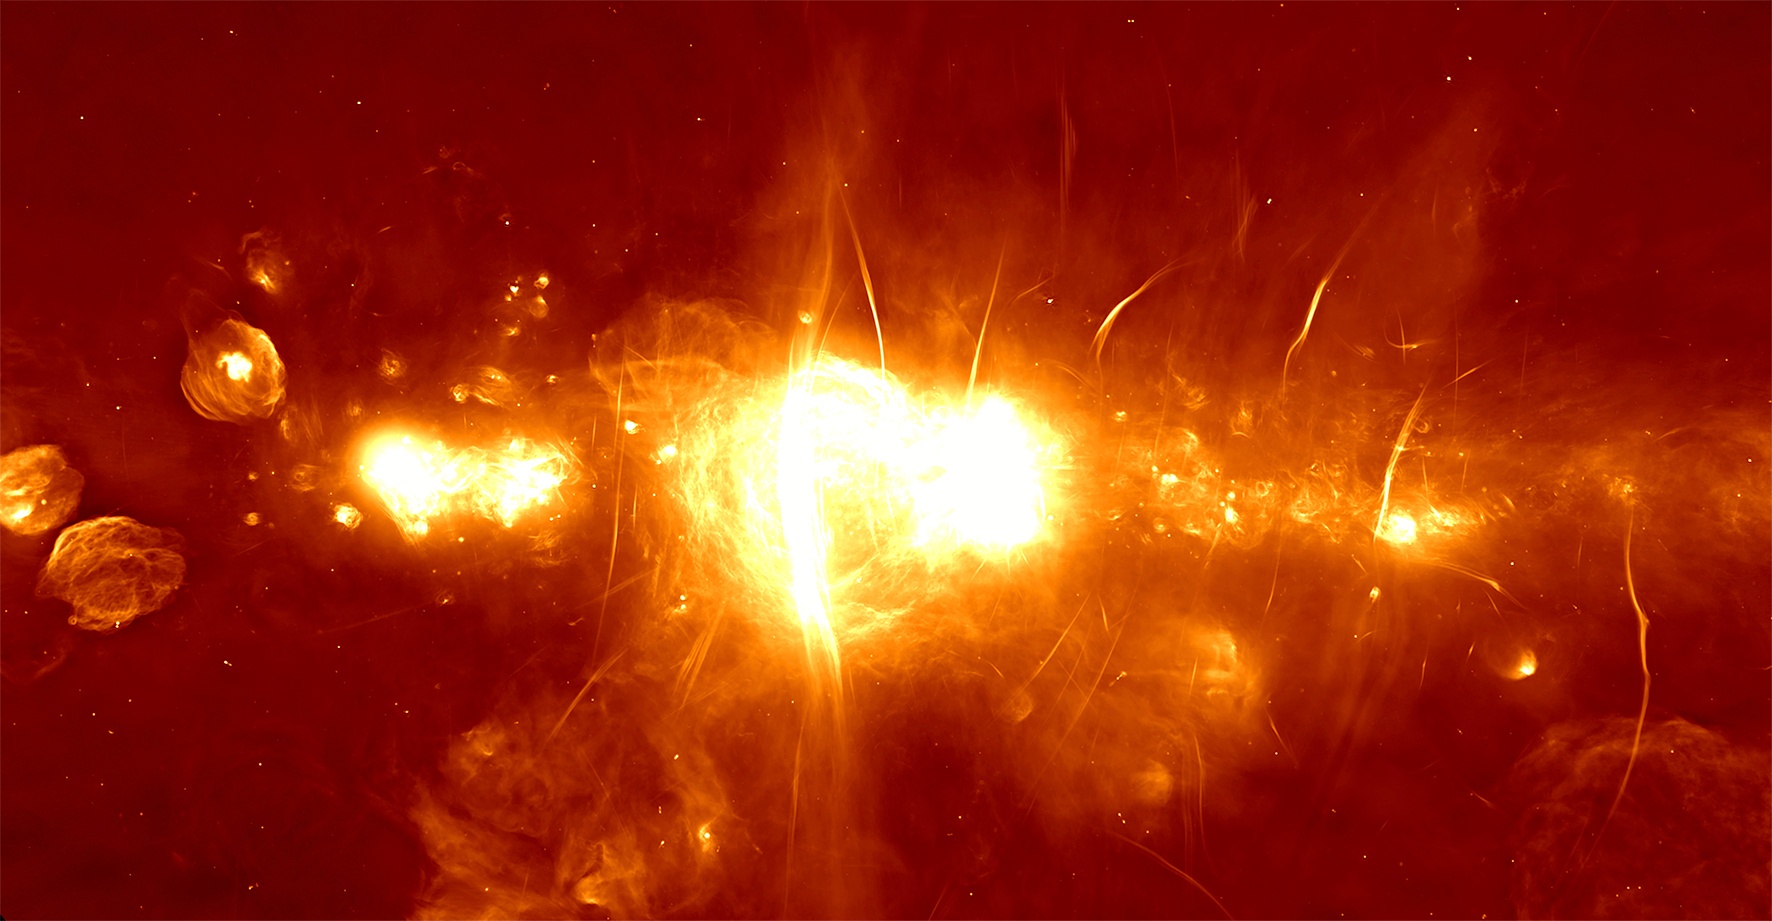 Milky Way Galactic Center imaged by MeerKAT